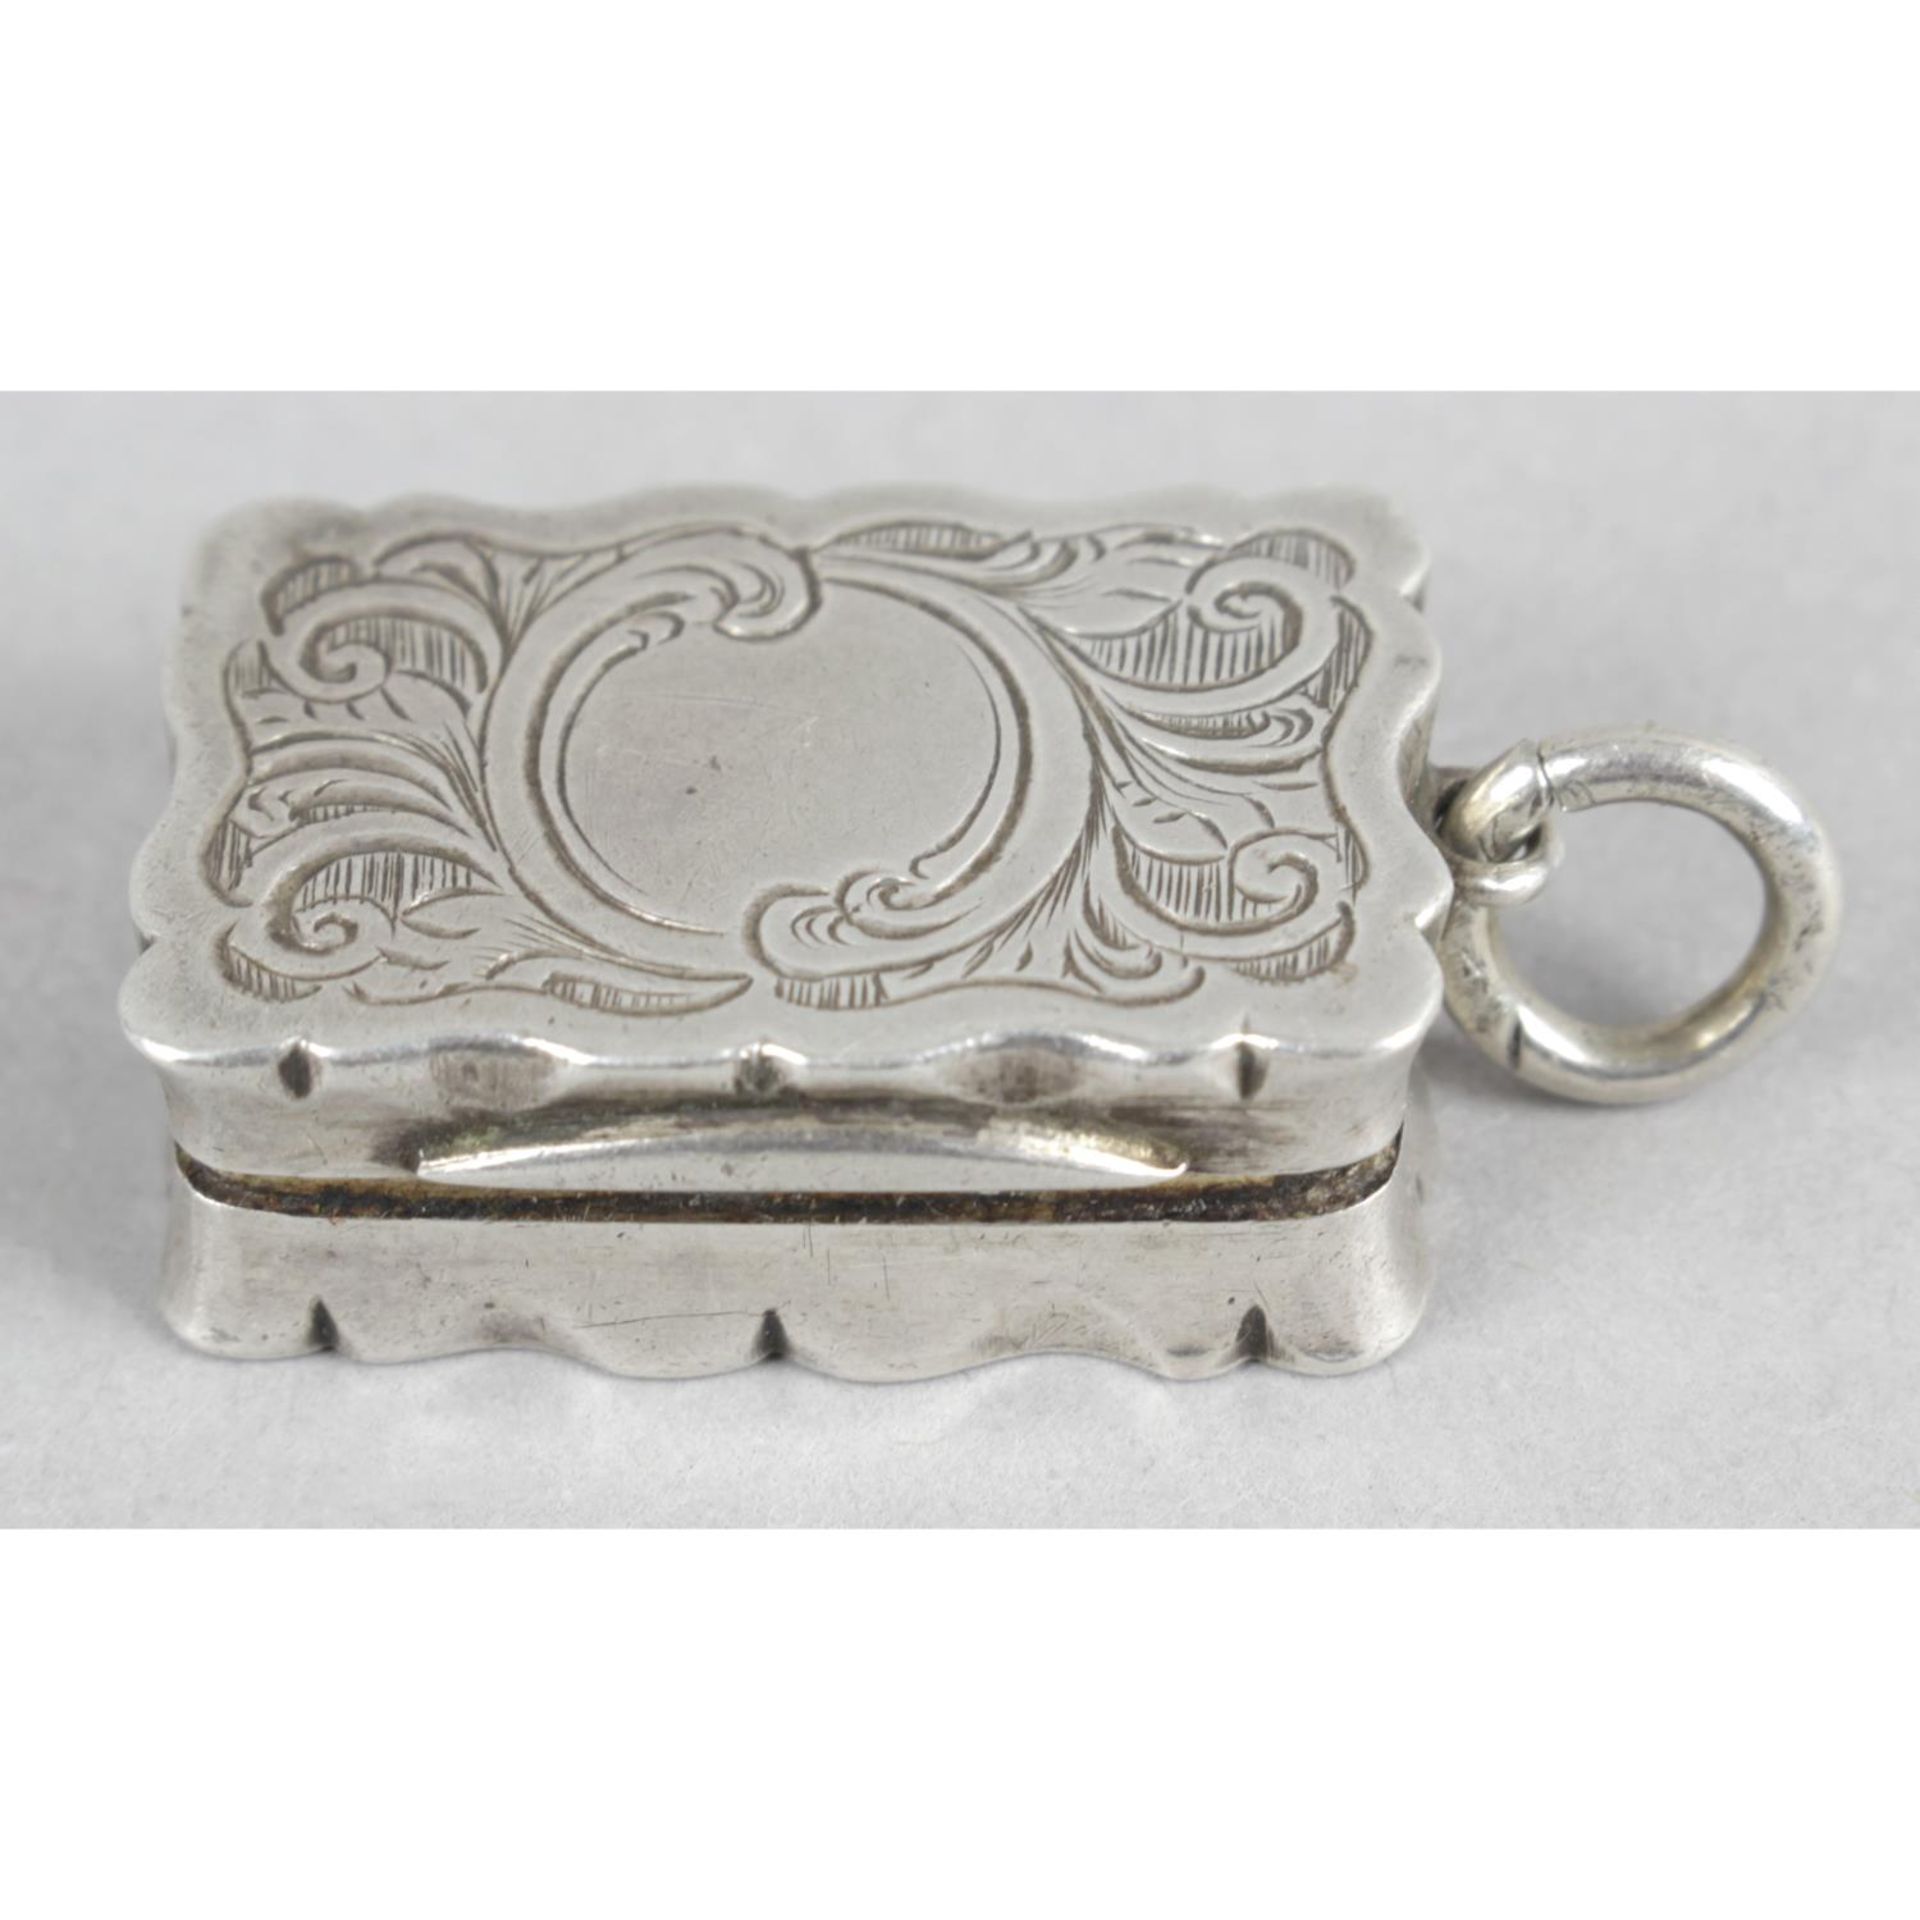 A Victorian silver pendant vinaigrette,